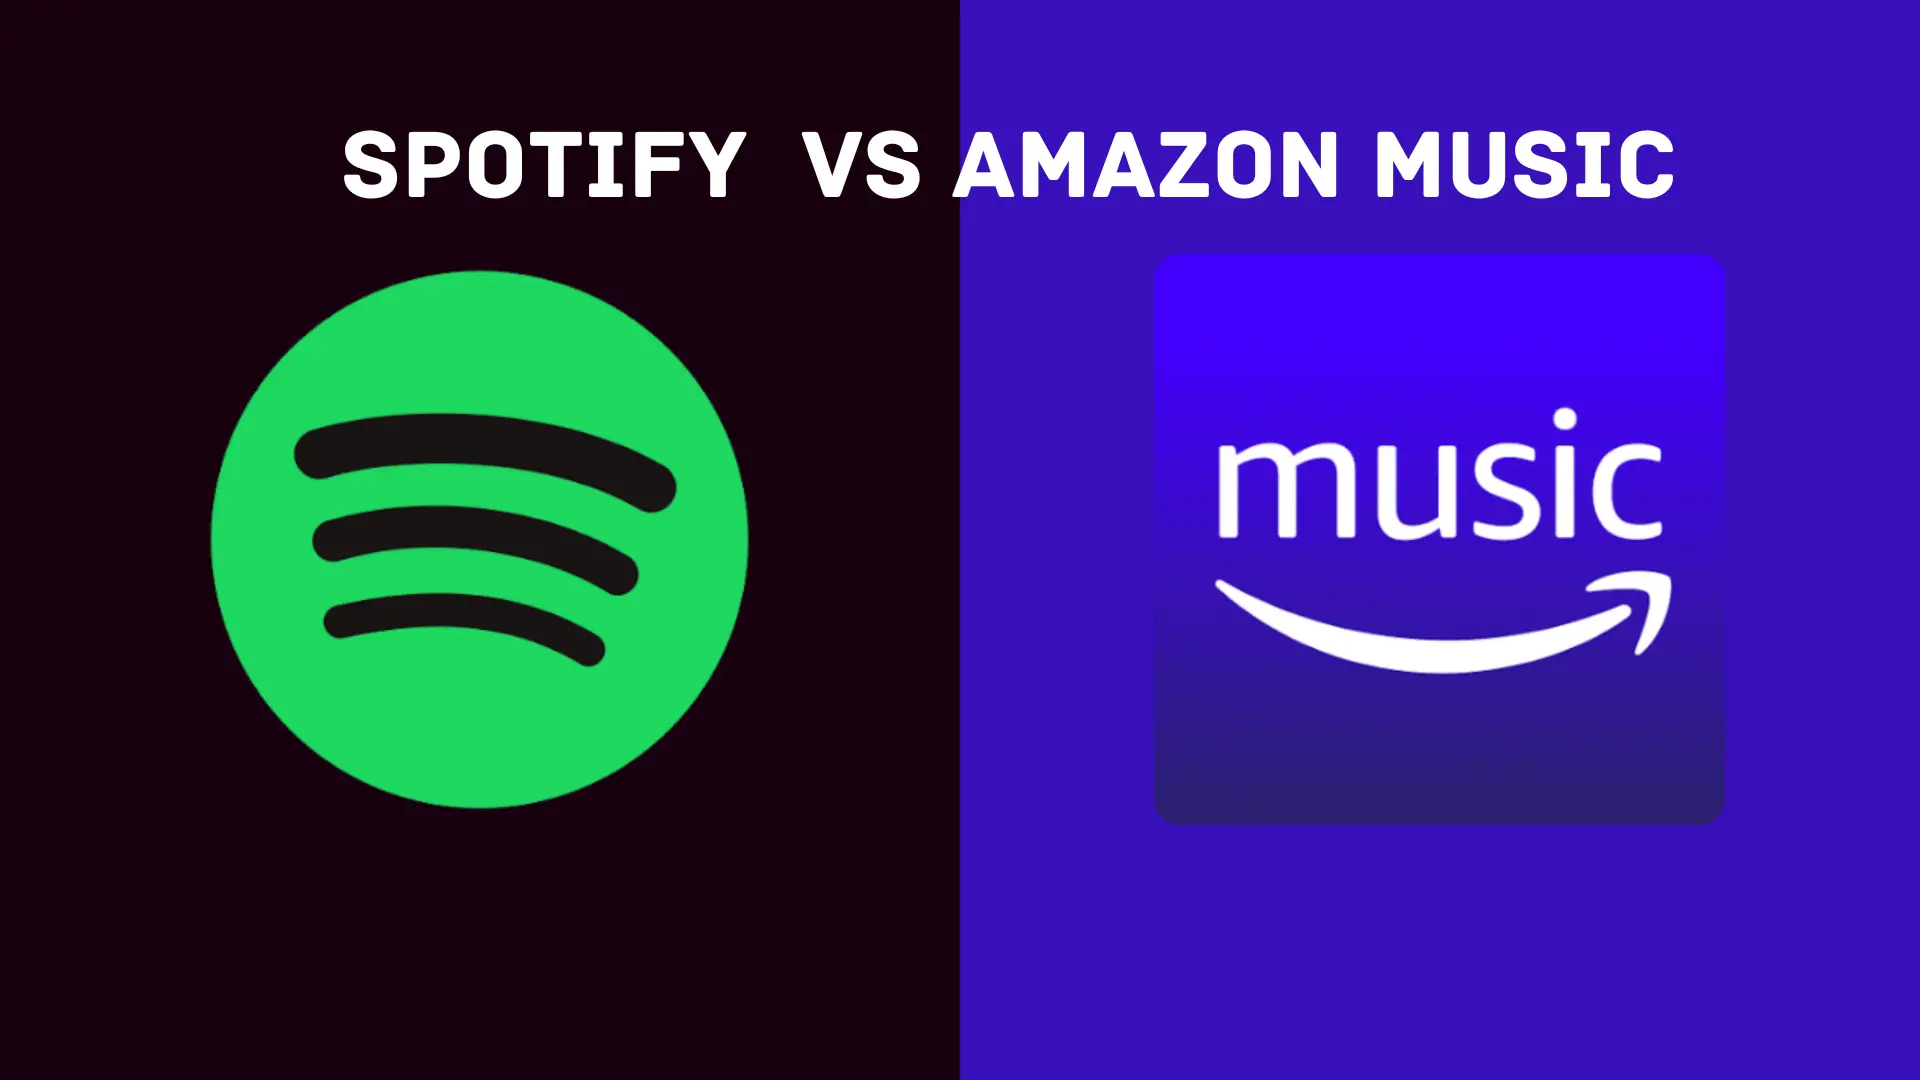 Amazon Music vs Spotify